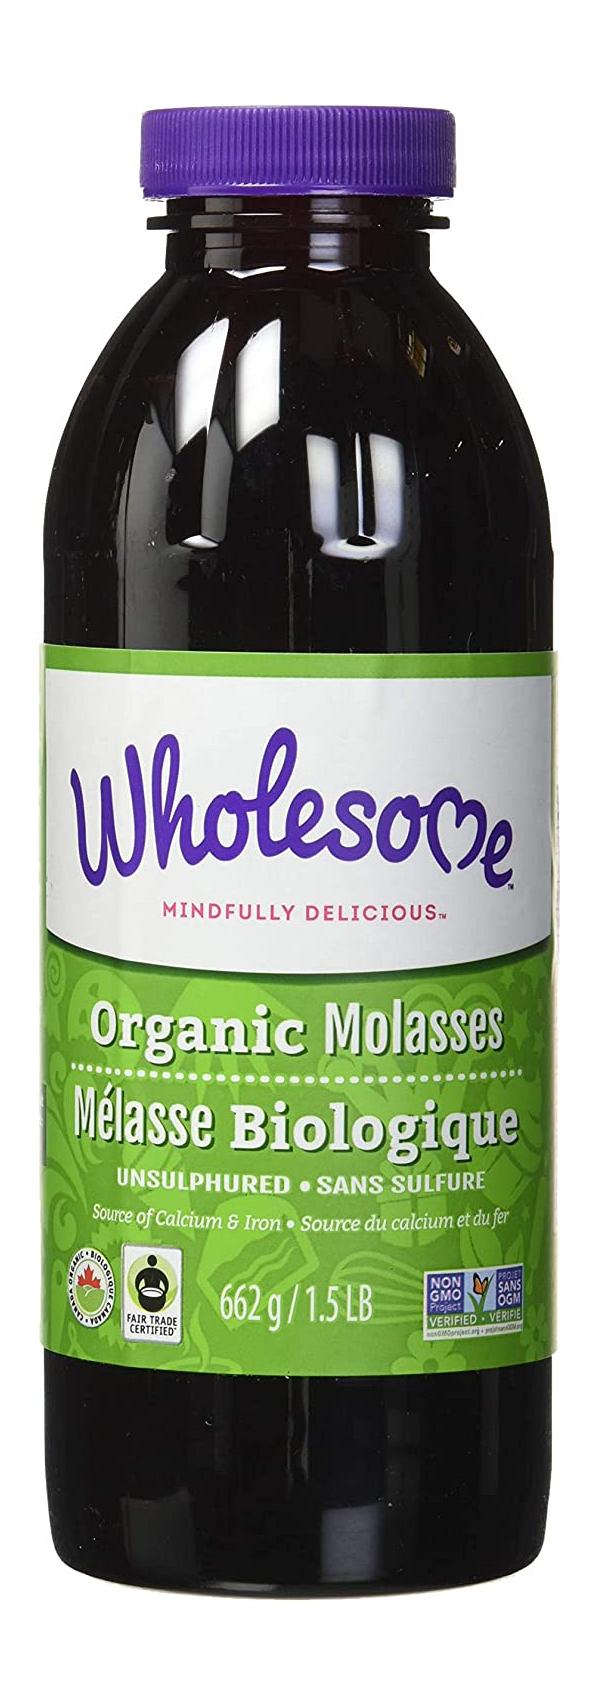 Organic Blackstrap Molasses - 662g by Wholesome Sweeteners 600